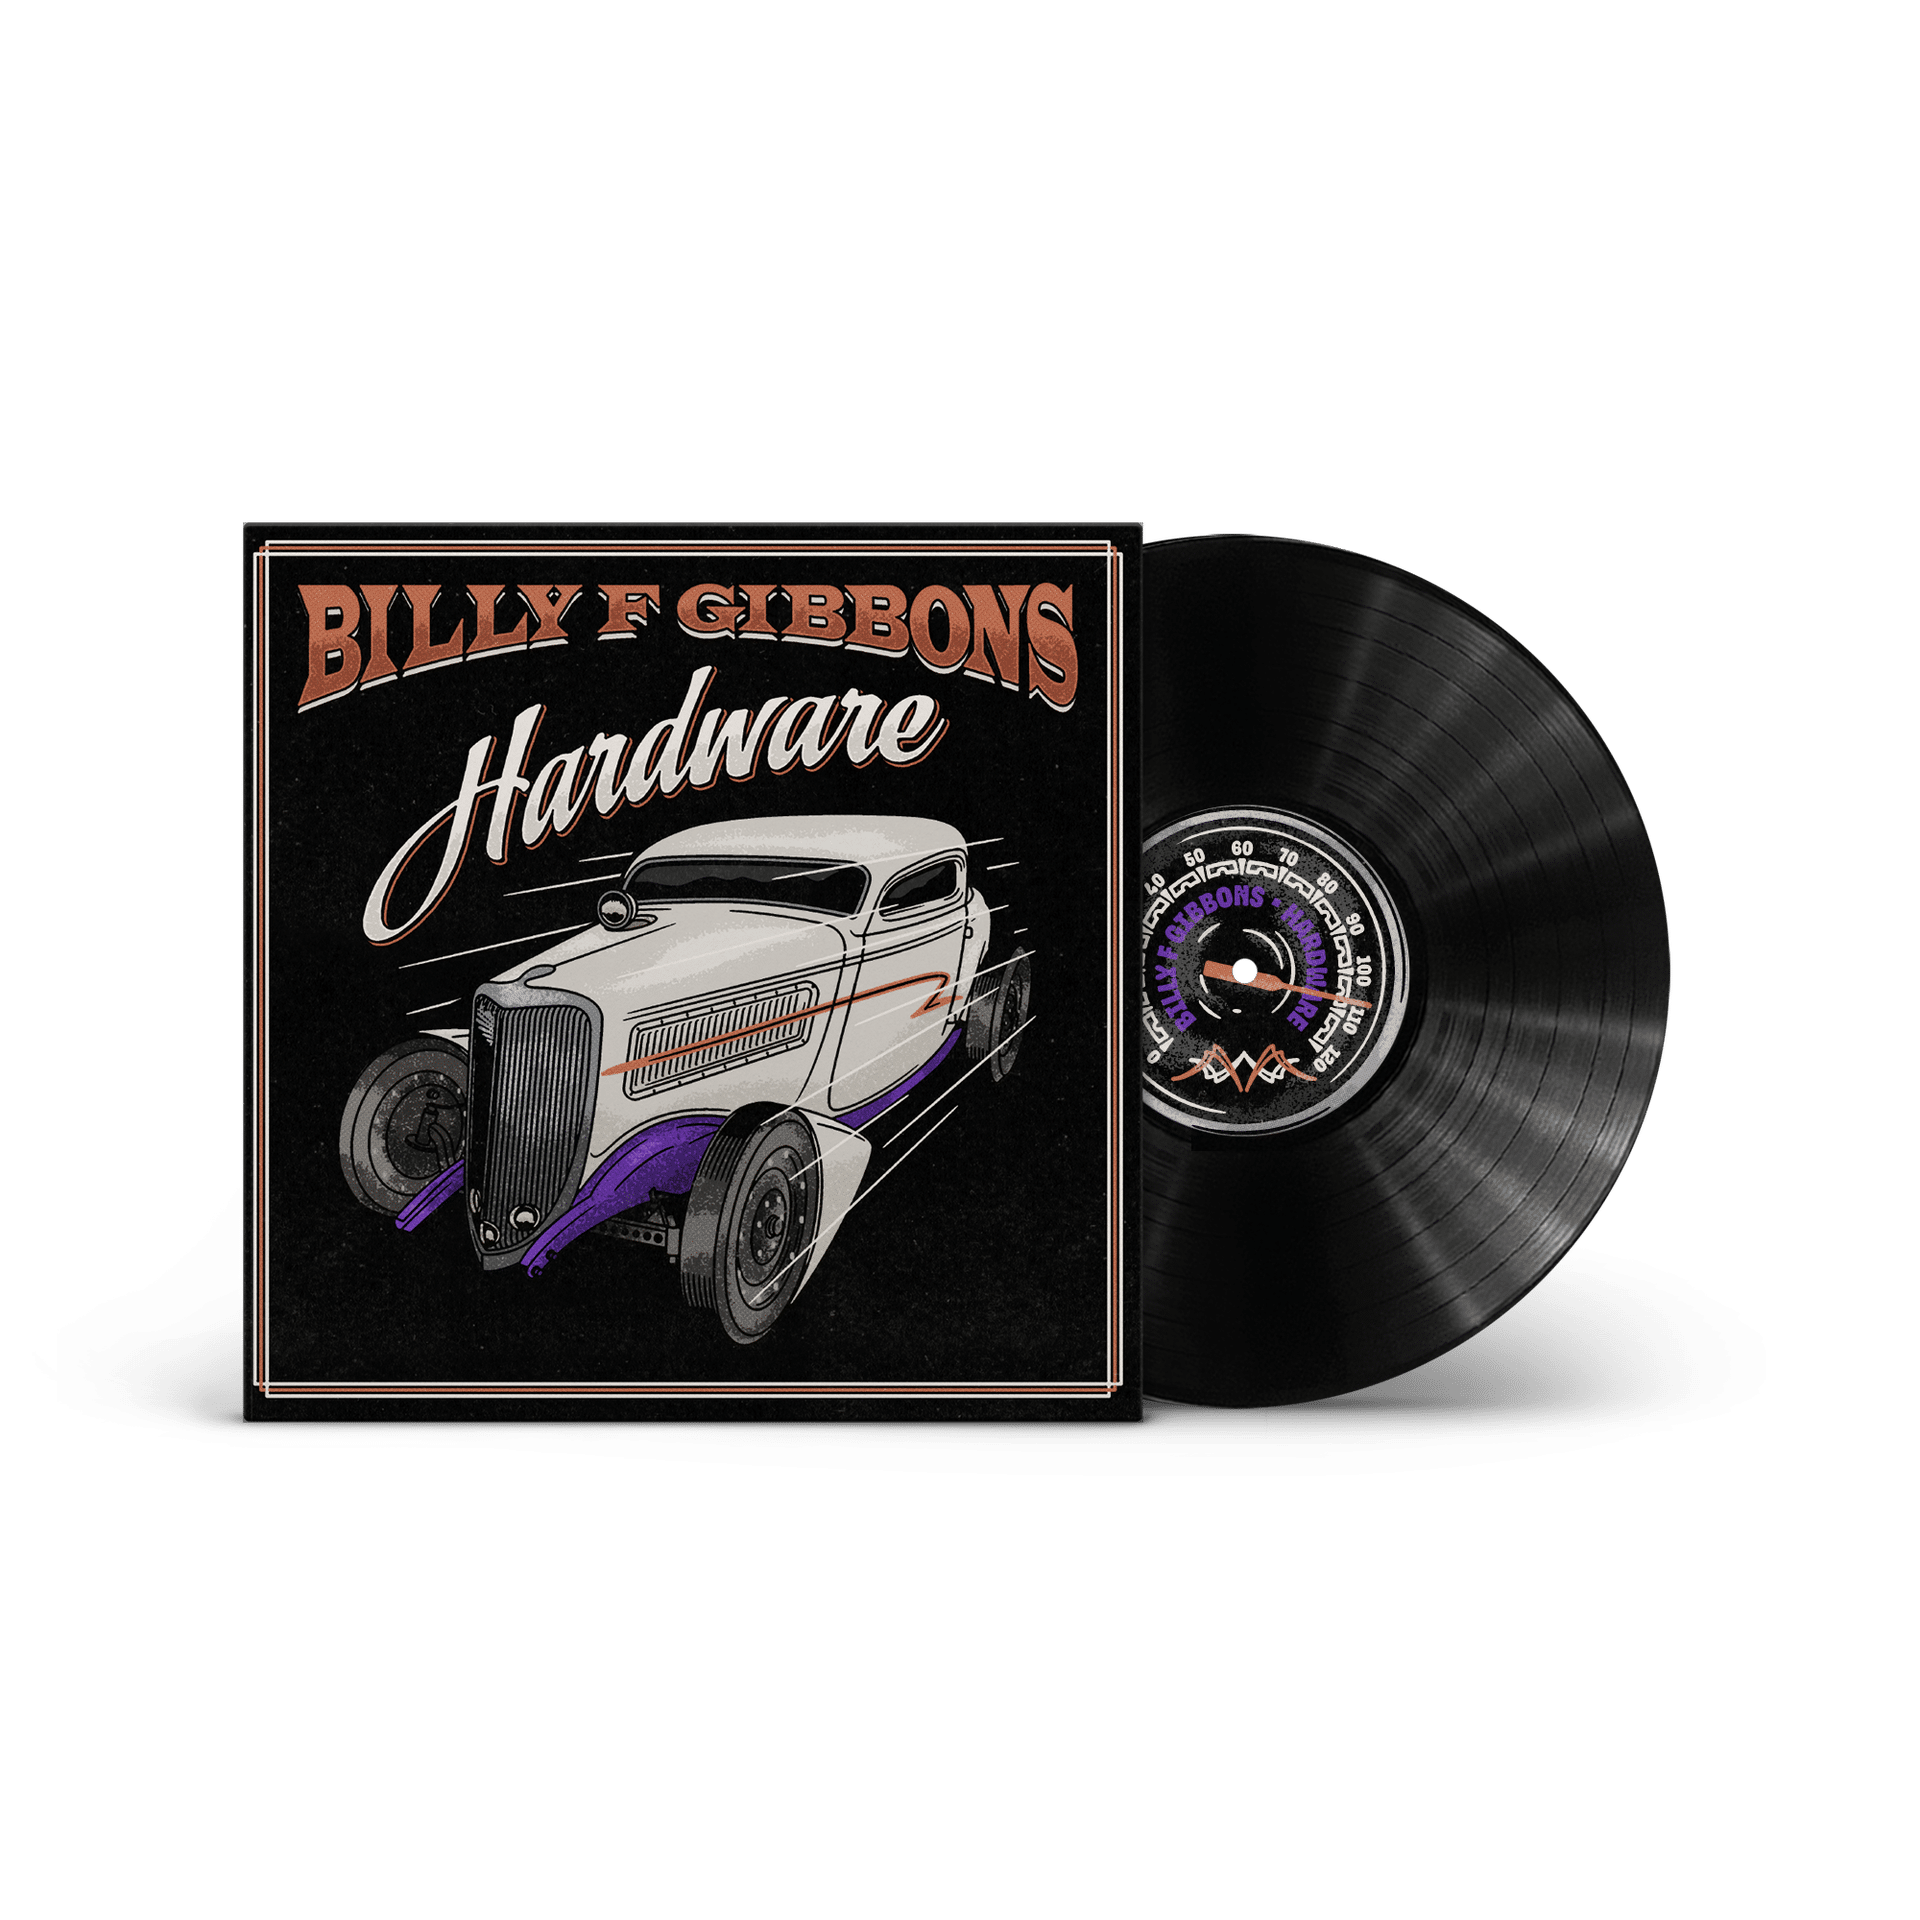 Billy F Gibbons - Hardware